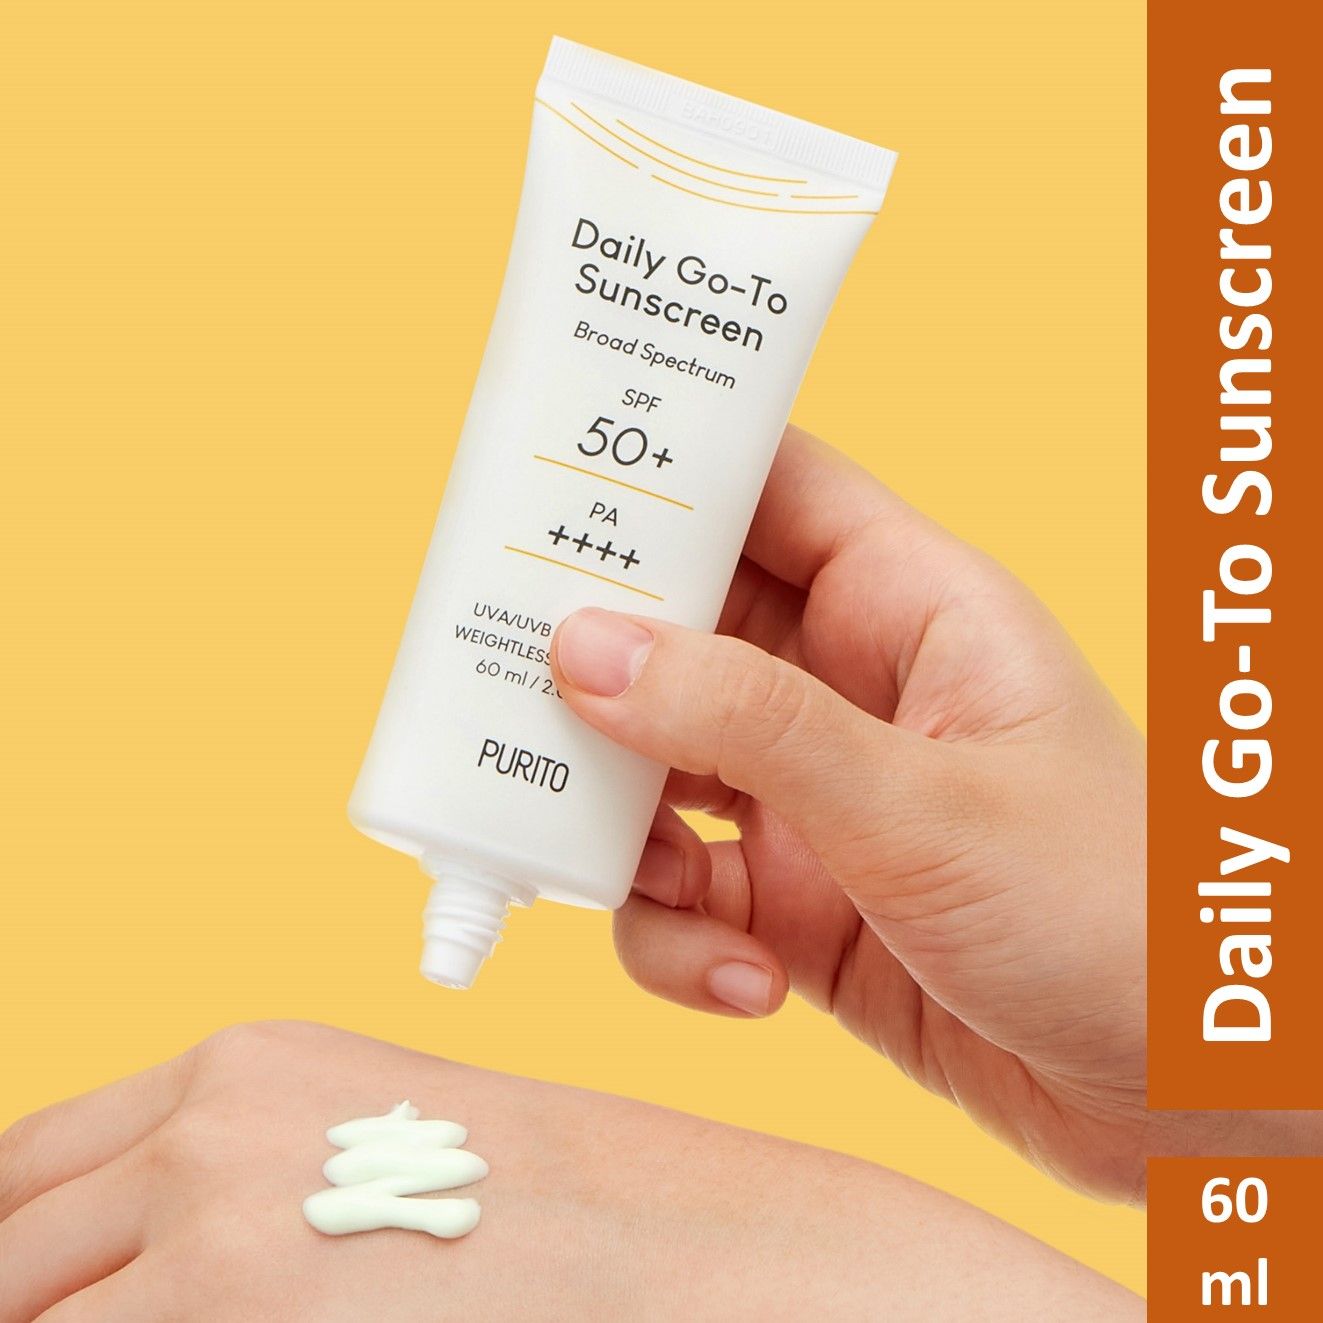 PURITO Daily Go-To Sunscreen (60ml) | Korean Skin Care